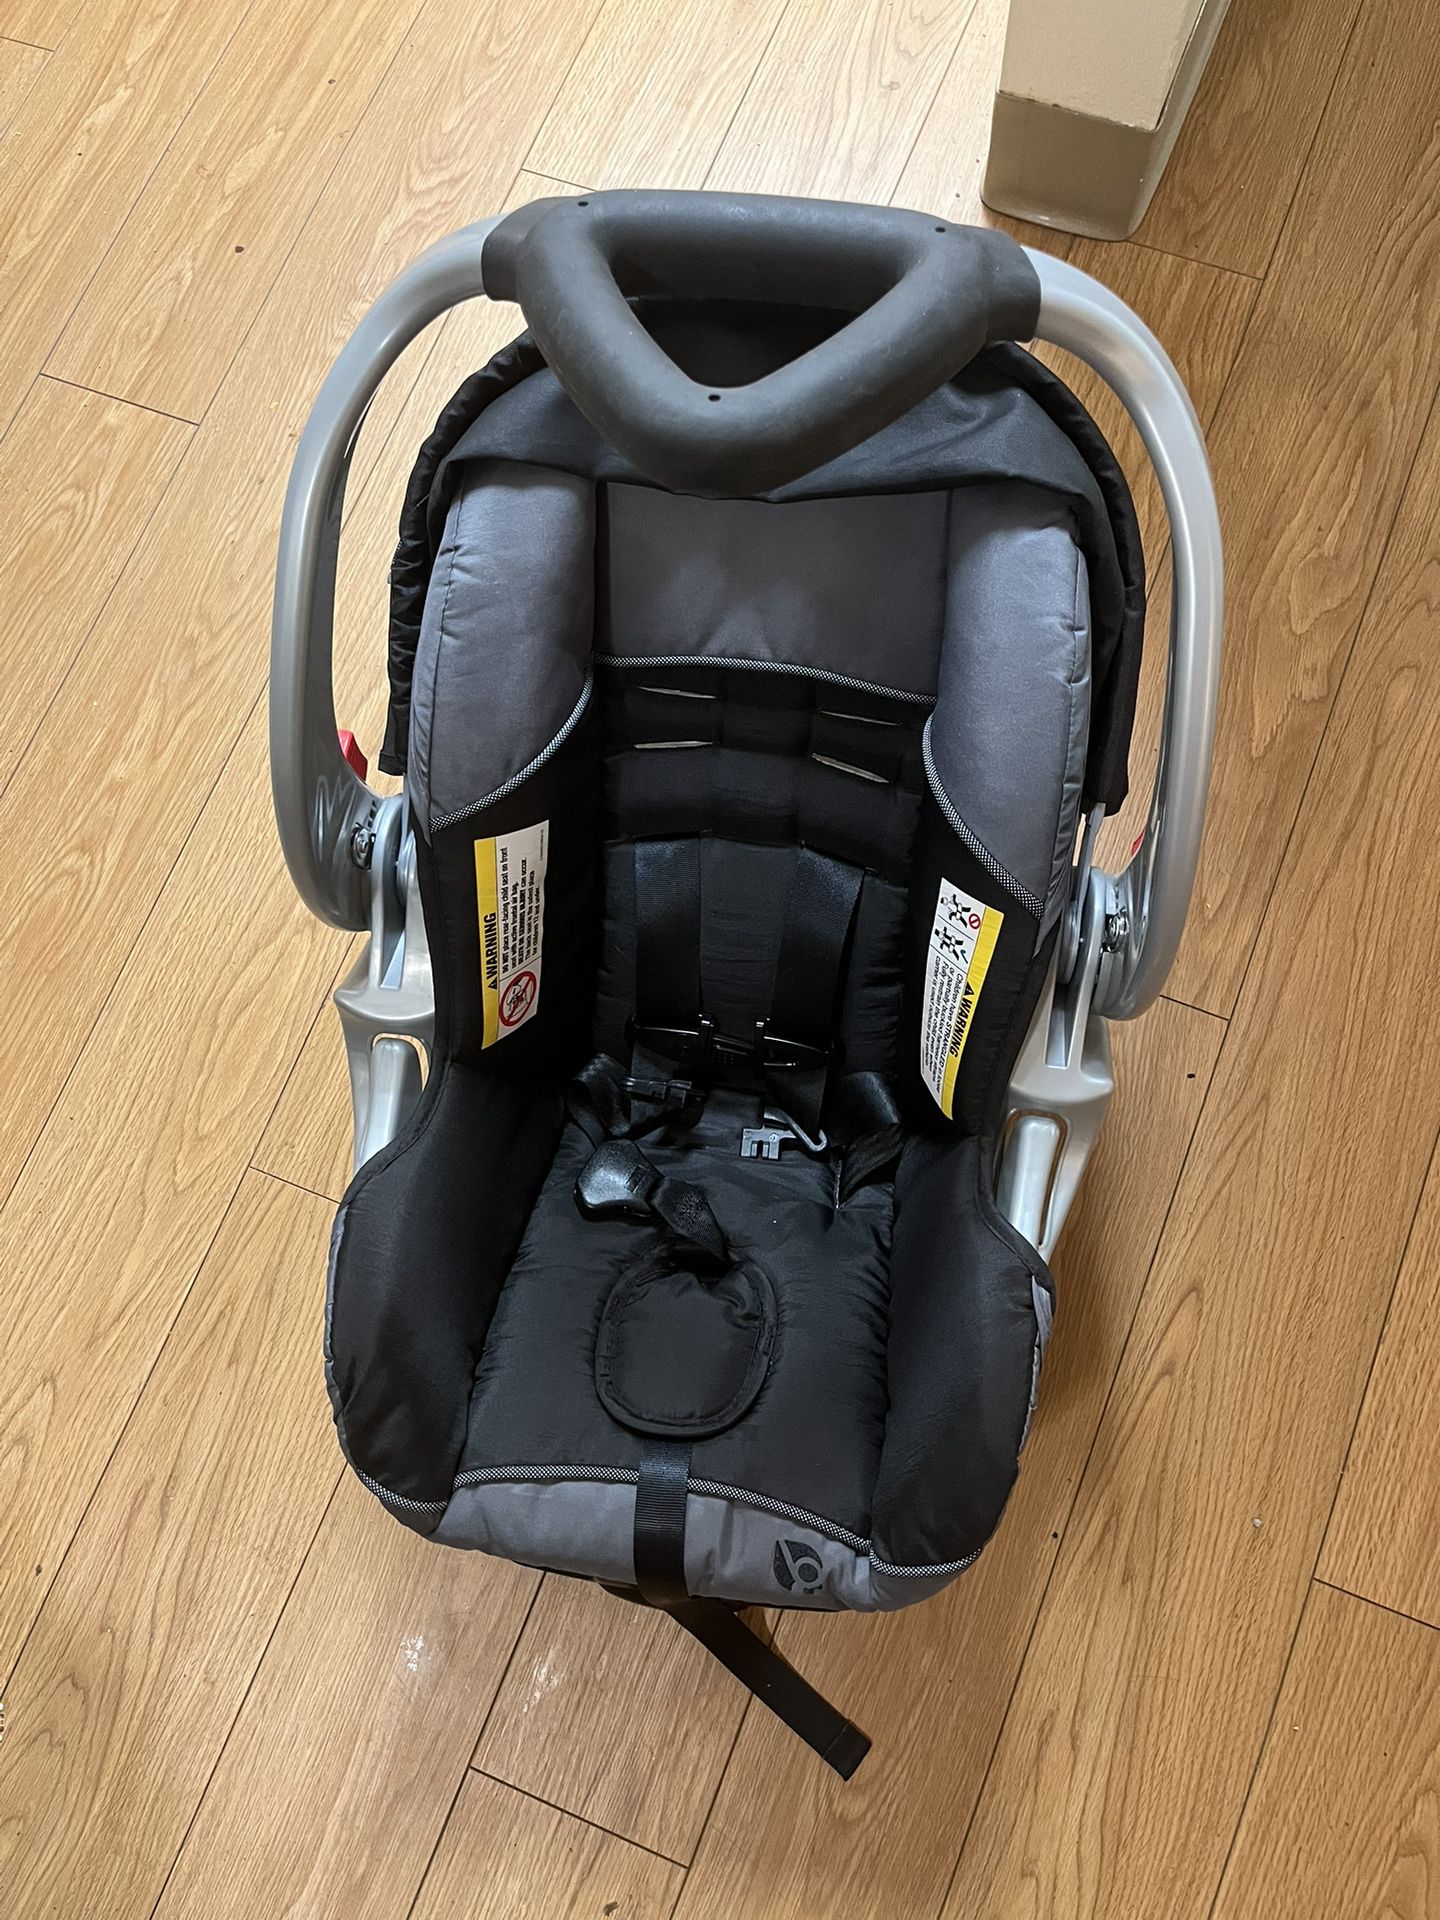 Babytrend Forward/rear Facing Car Seat